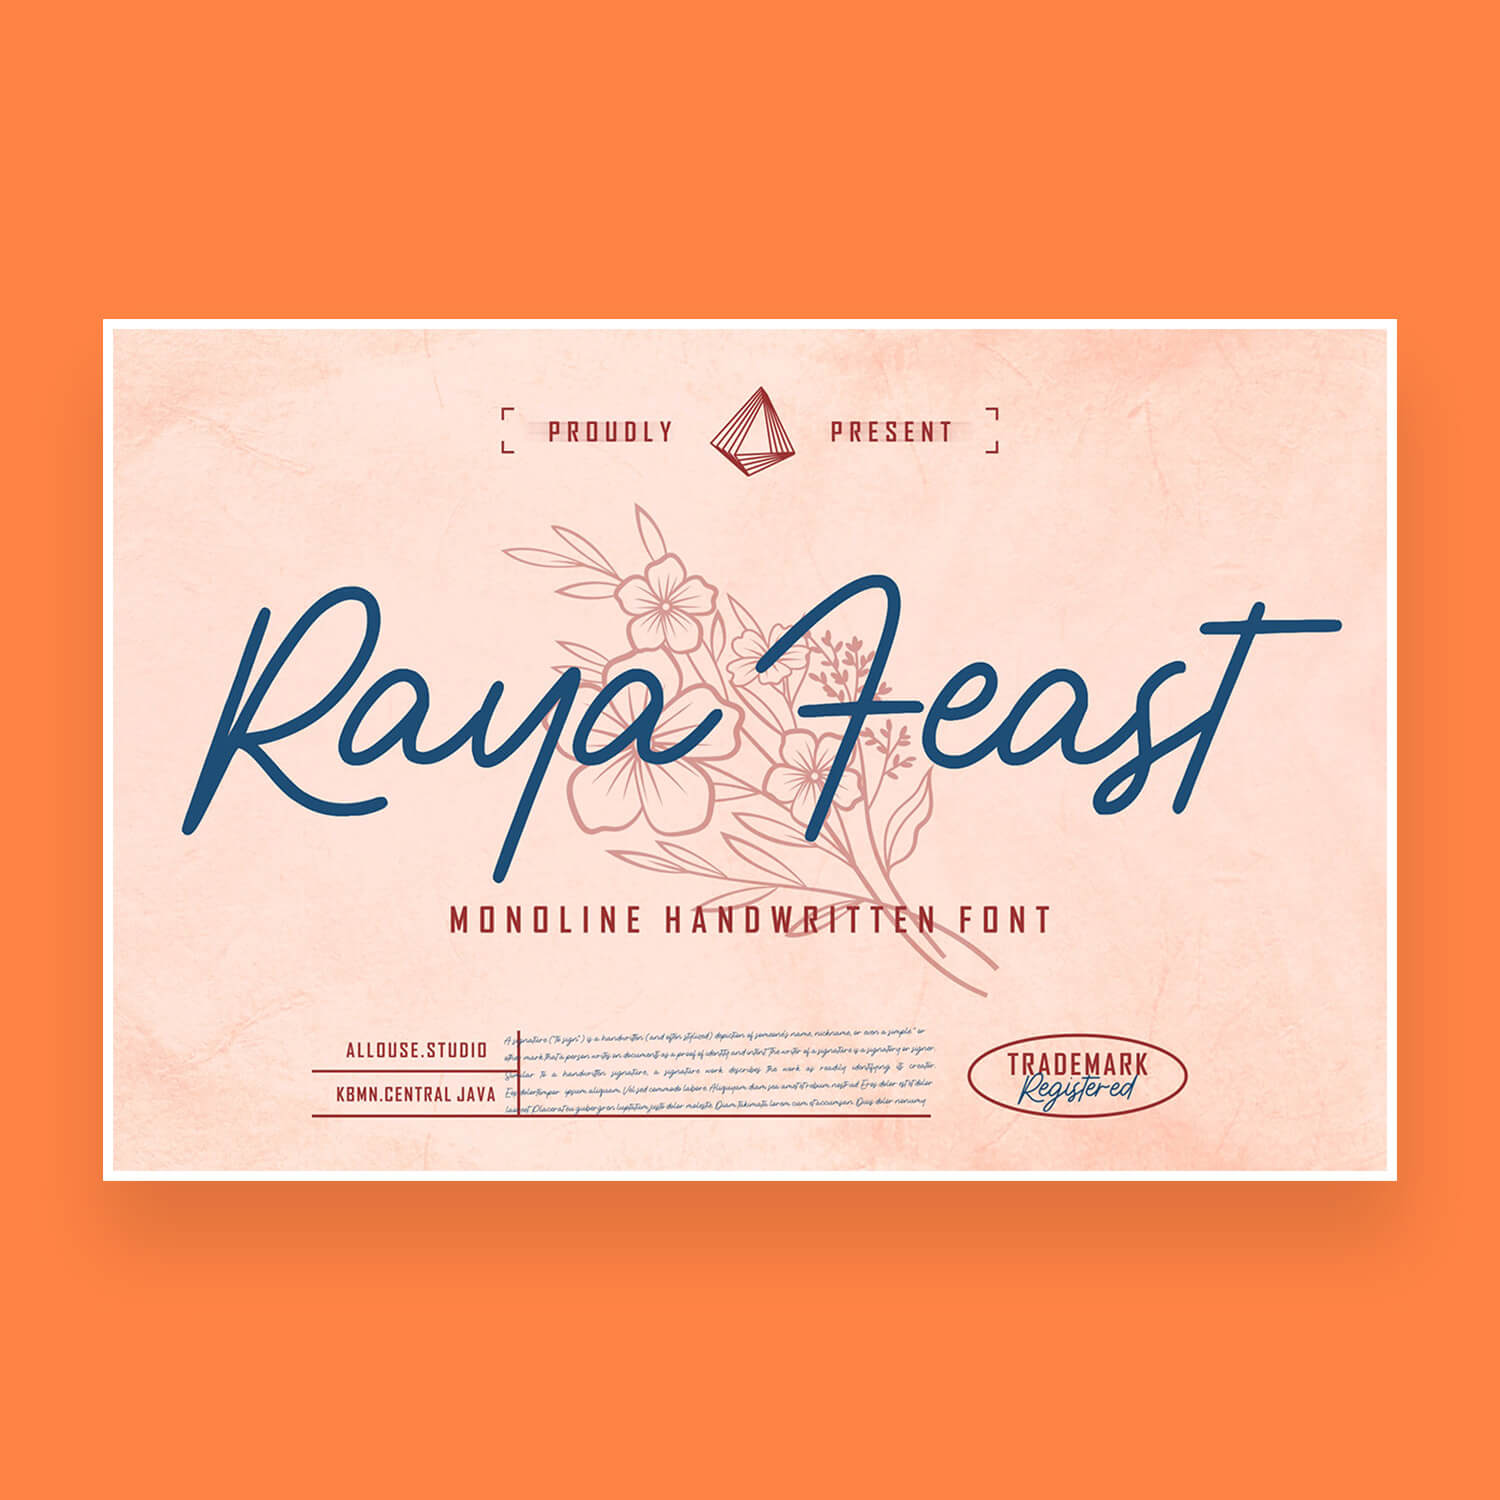 raya feast beautiful monoline handwritten font cover image.